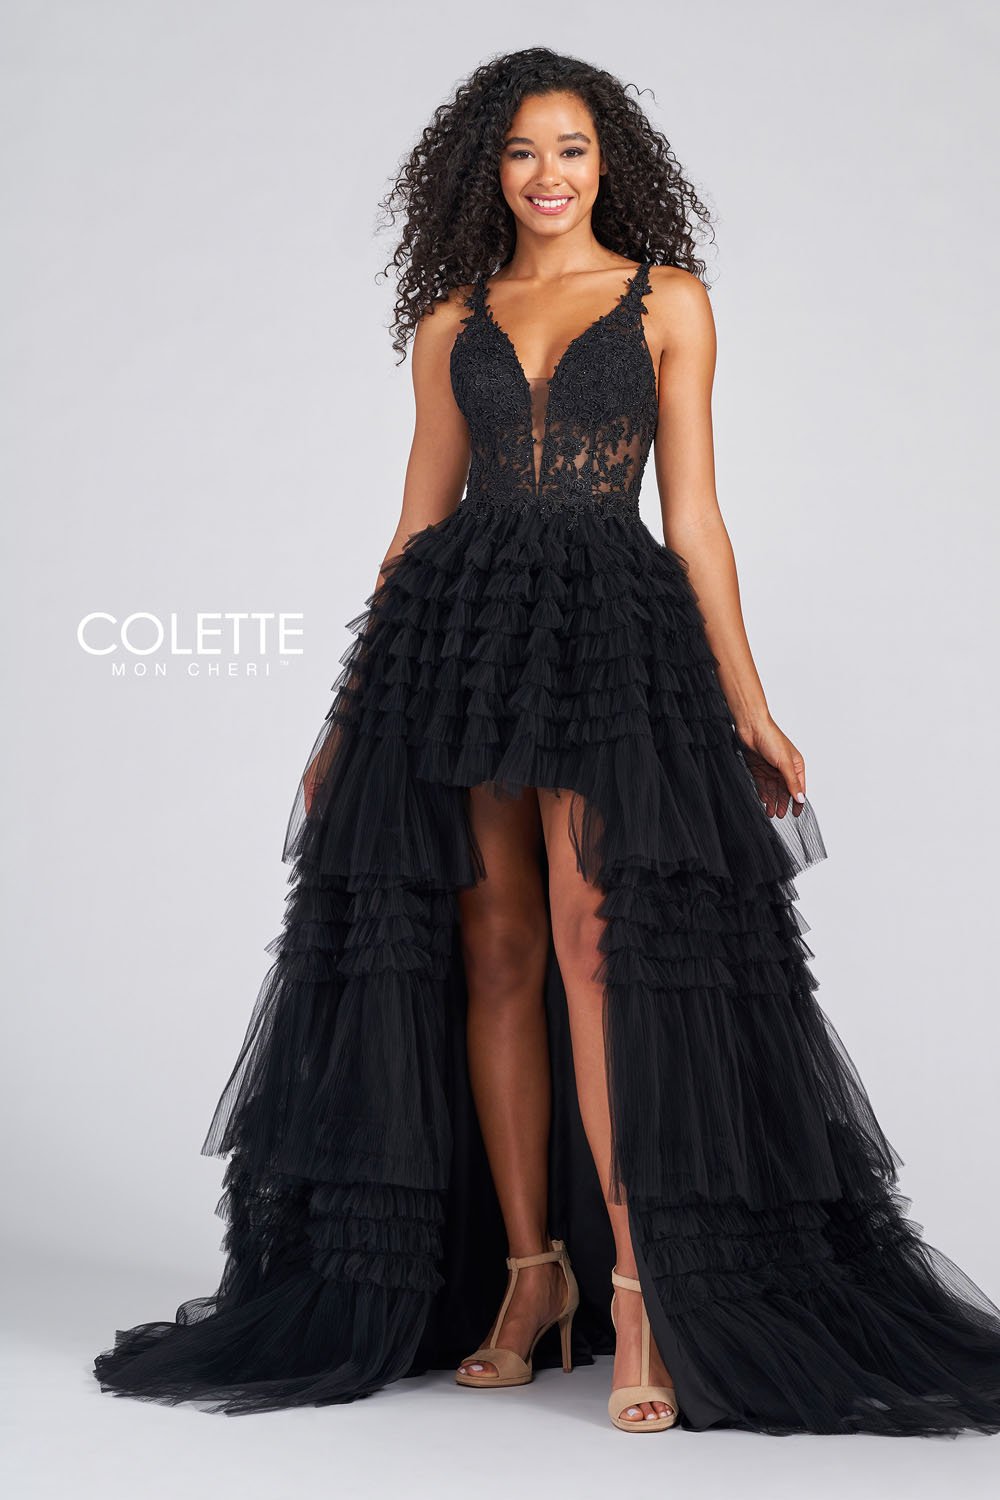 Colette CL12281 Black prom dresses.  Black prom dresses image by Colette.